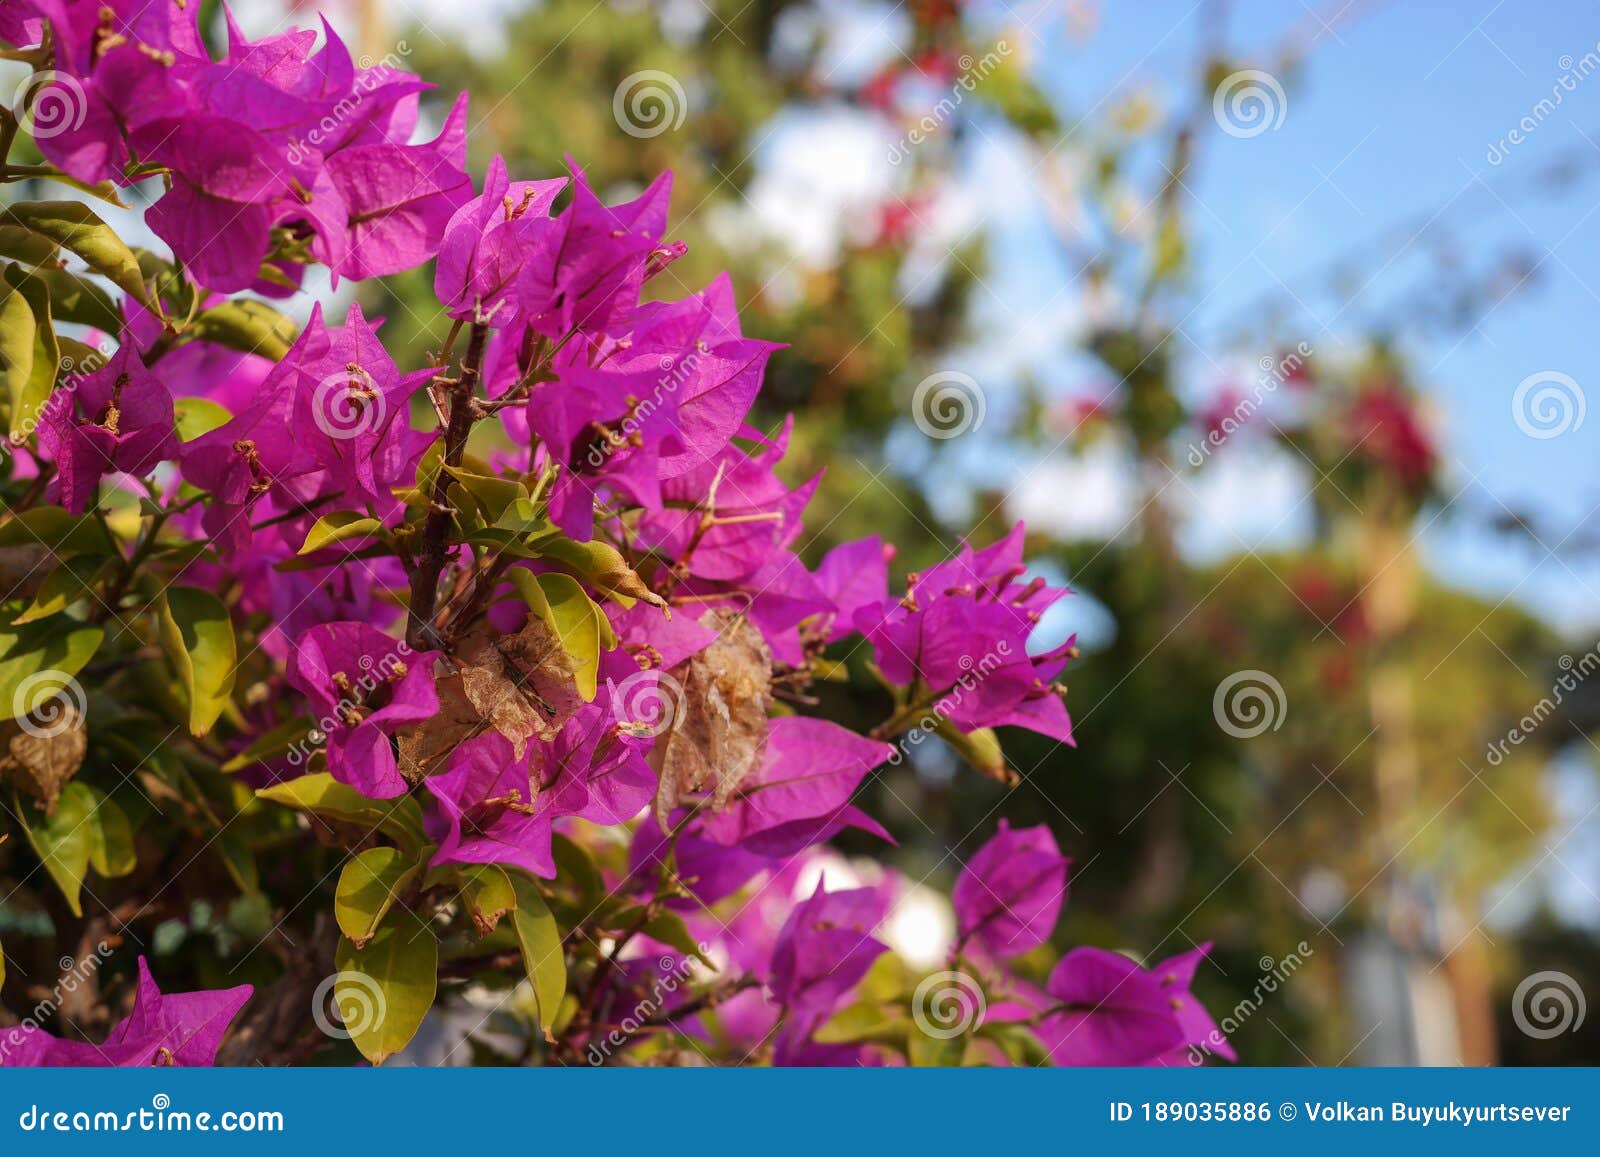 Bougainvillea Glabra Or Paper Flower Or Bunga Kertas Stock Photo ...